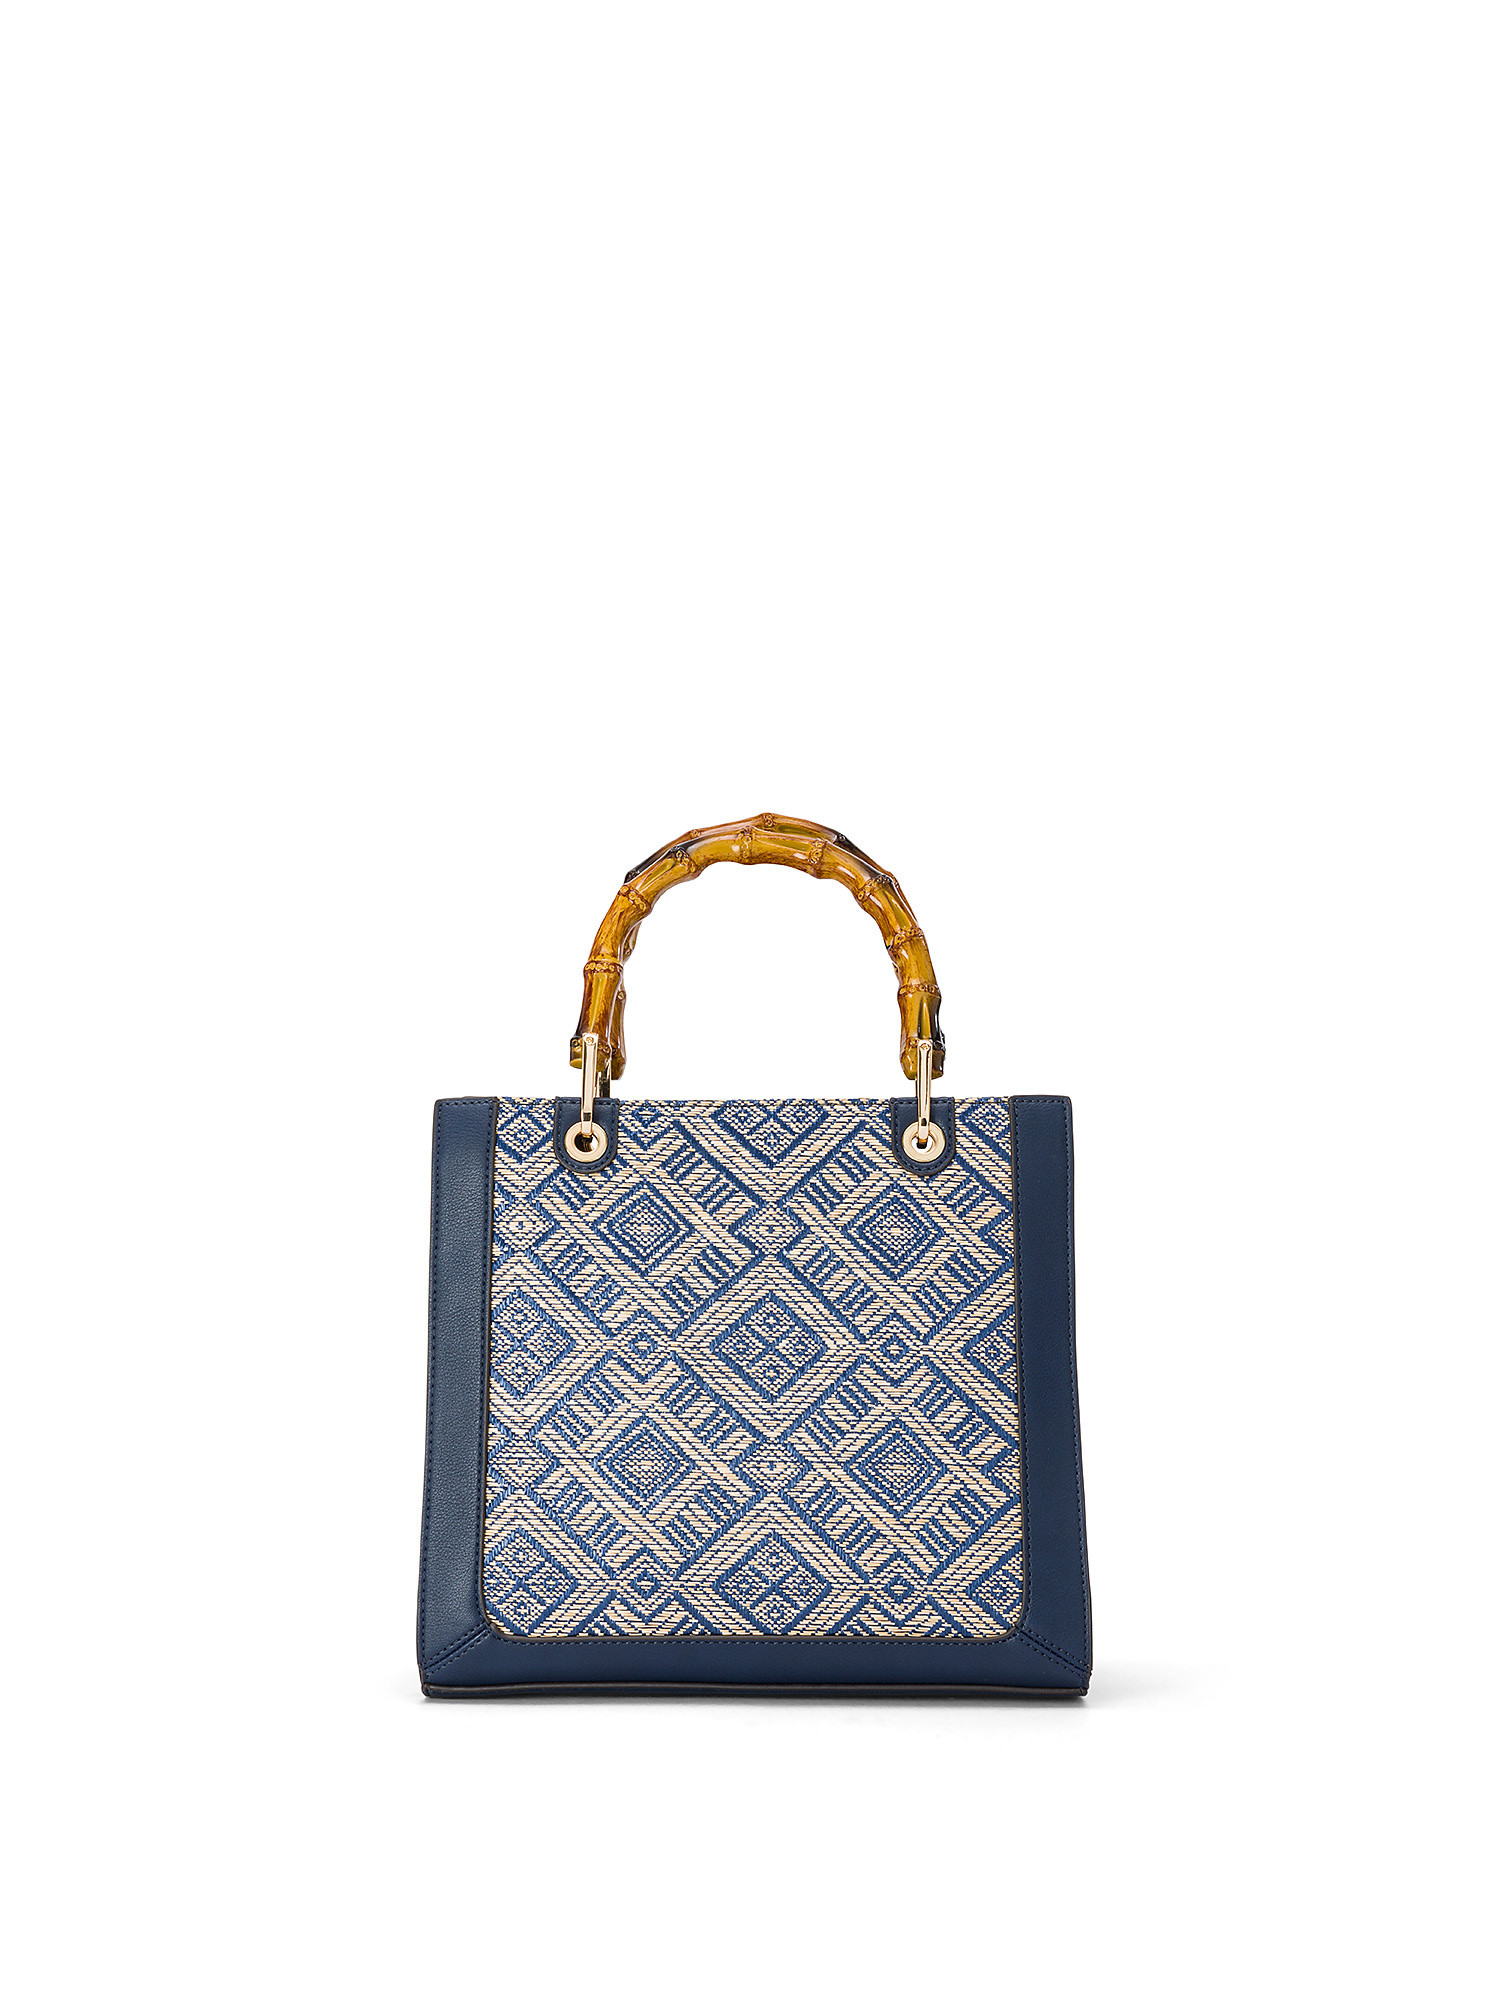 Koan - Handbag with insert, Blue, large image number 0